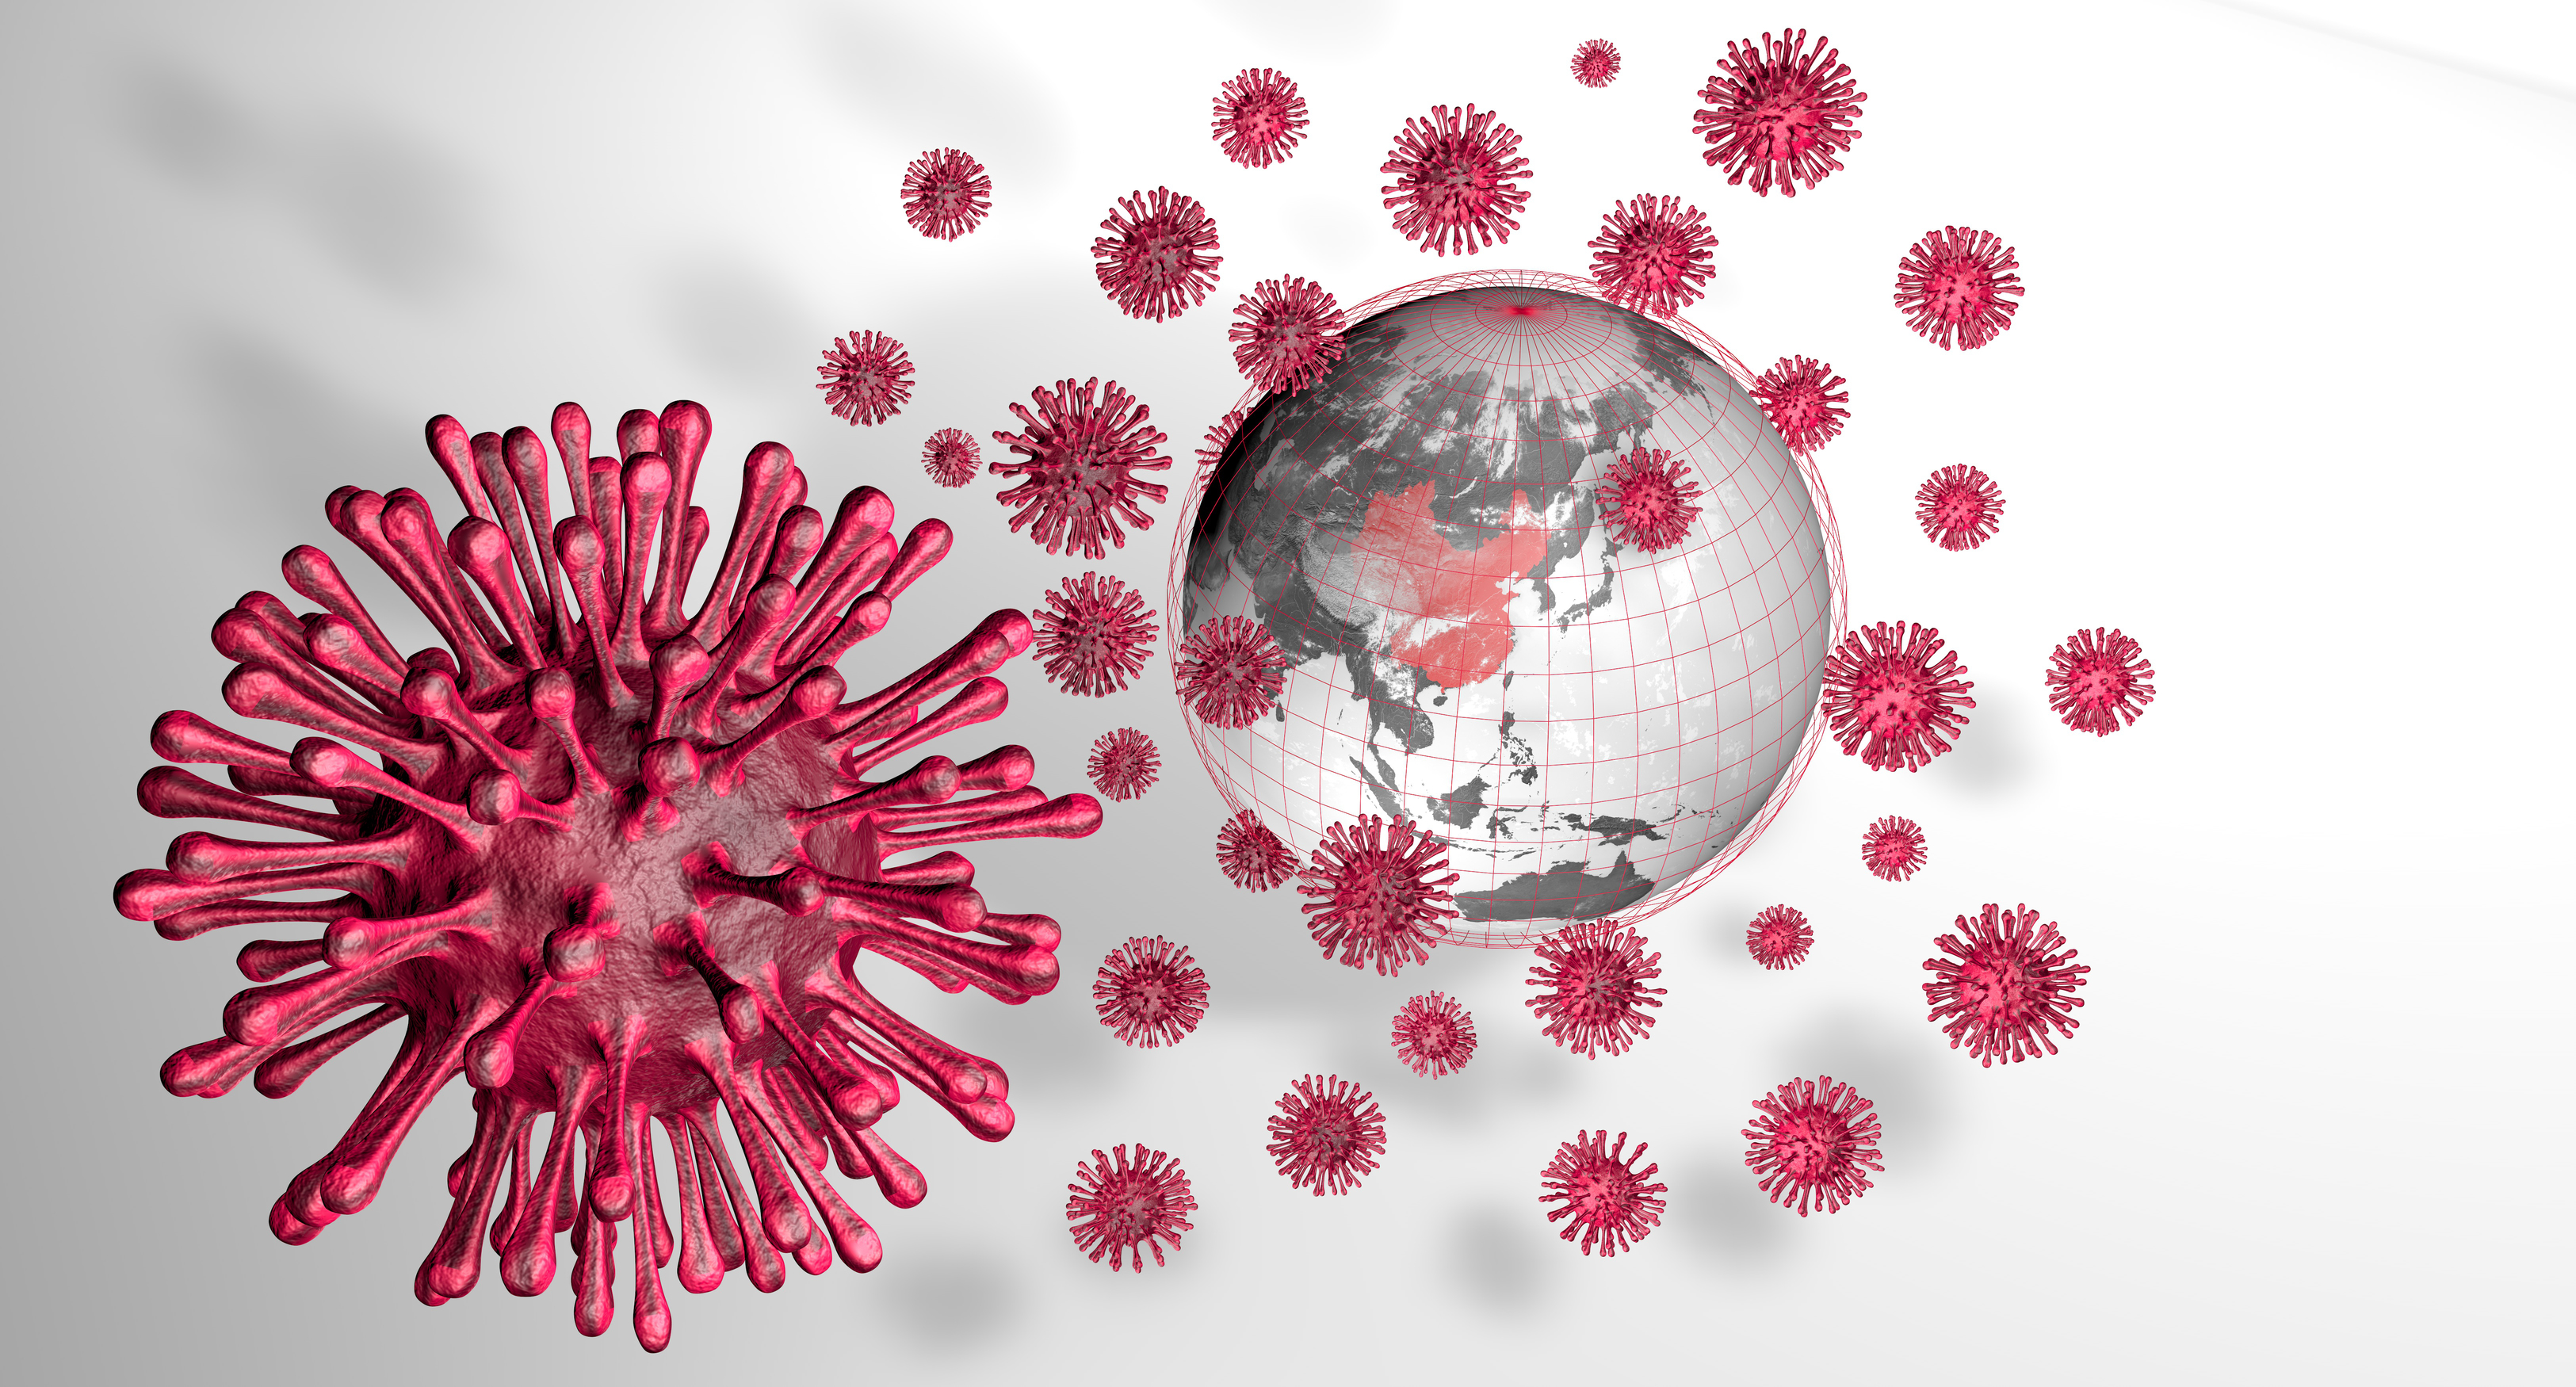 How is the Coronavirus affecting the Global Economy?